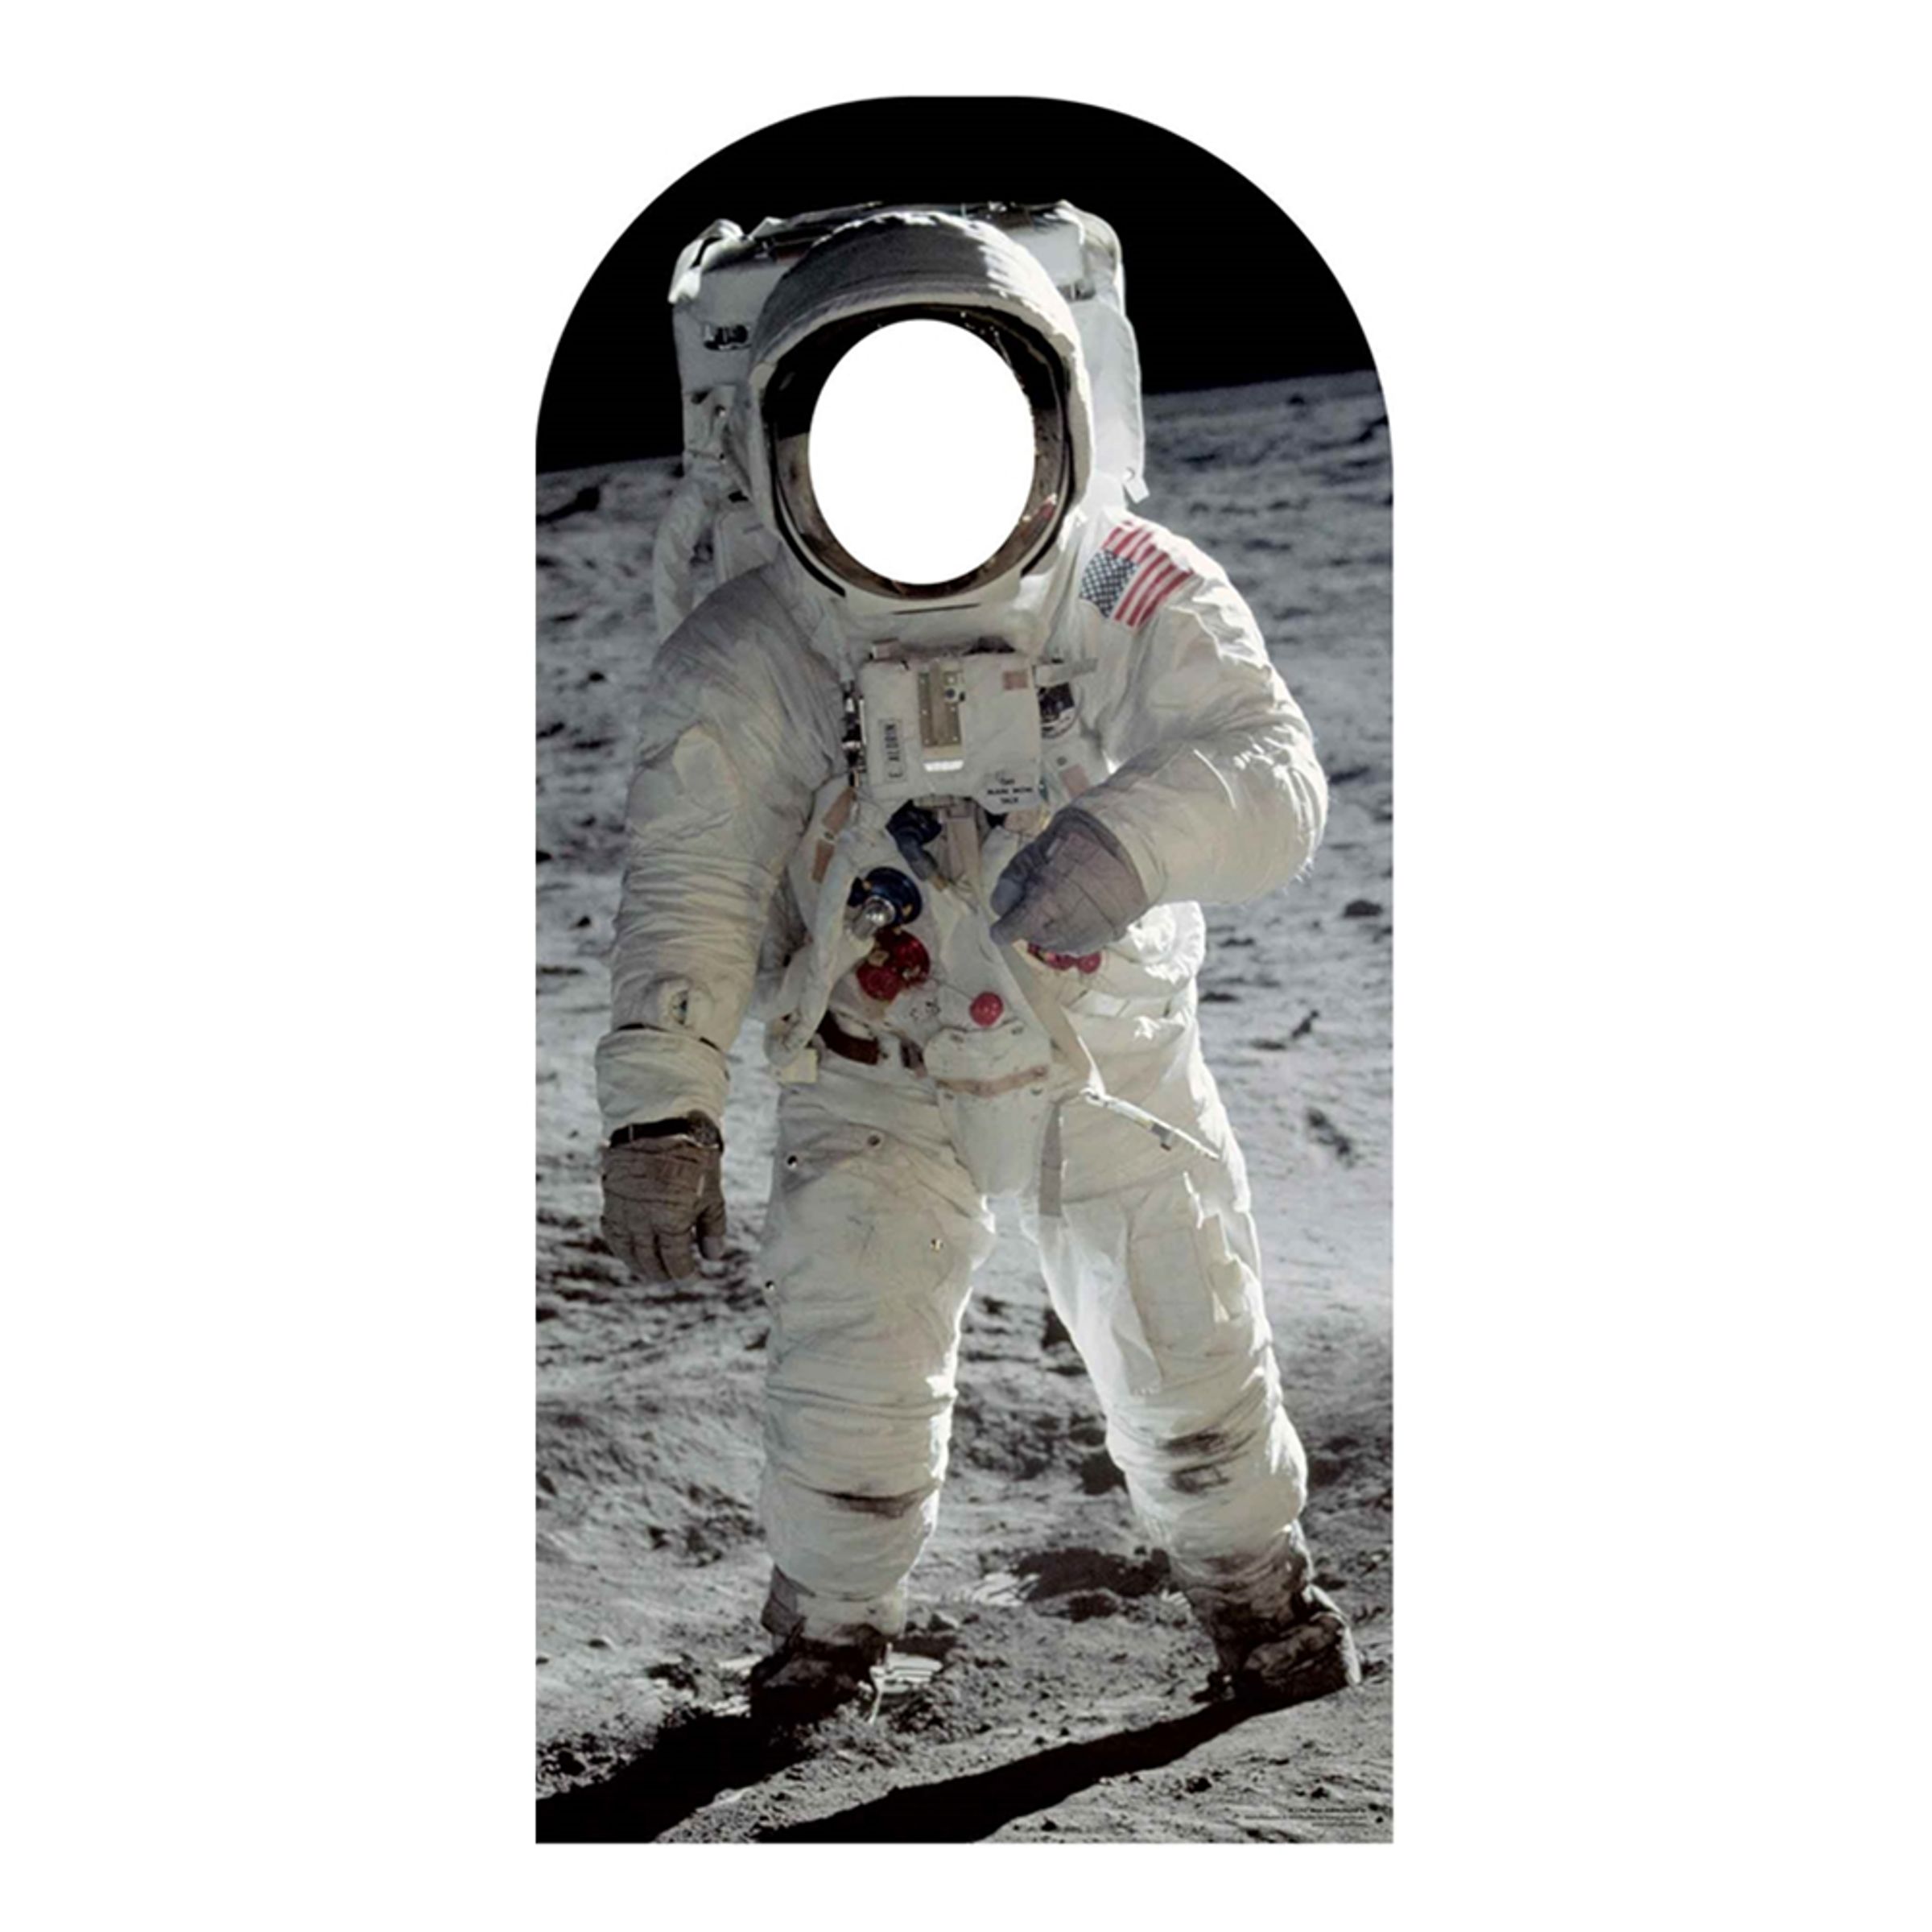 Astronaut Buzz Aldrin Stand-In Kartongfigur